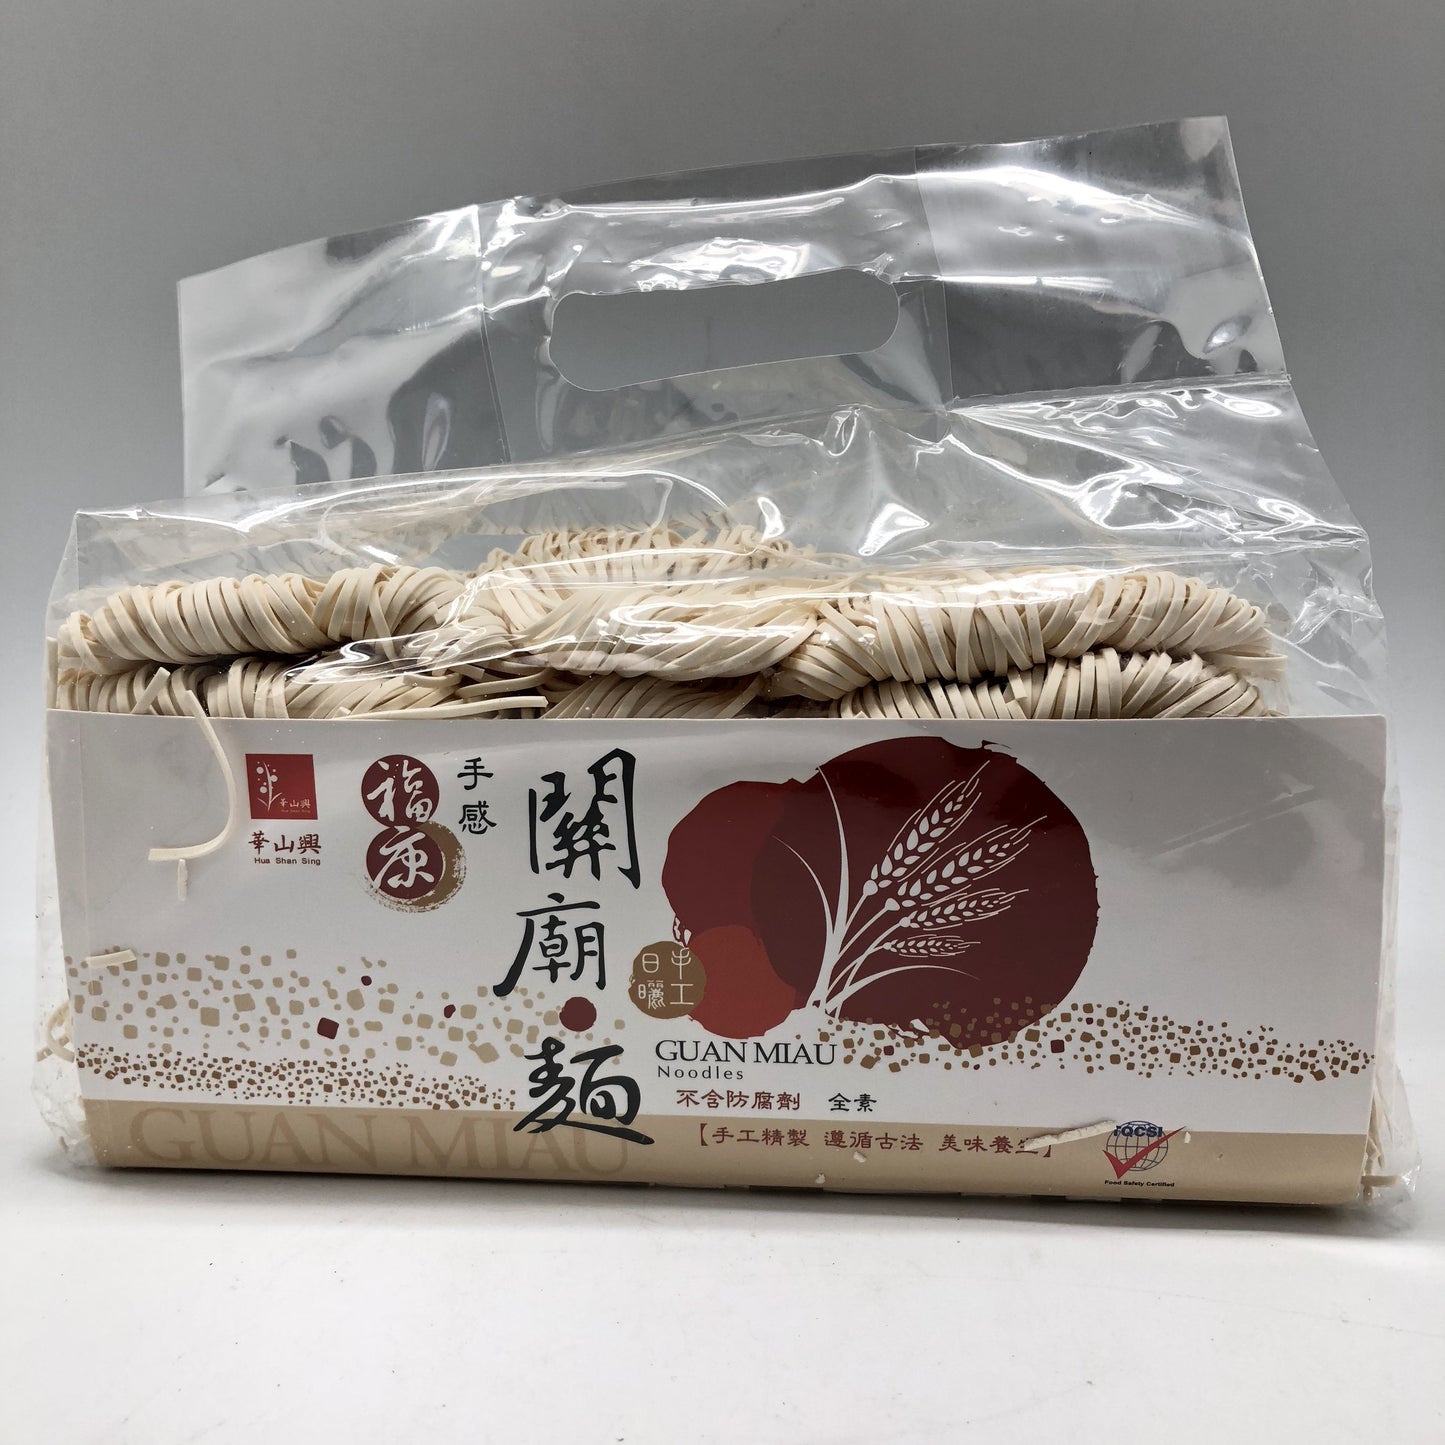 N014TM Hua Shan Sing Brand - Guan Miau Dried Noodles (medium) 1.2kg - 12 bags / 1CTN - New Eastland Pty Ltd - Asian food wholesalers